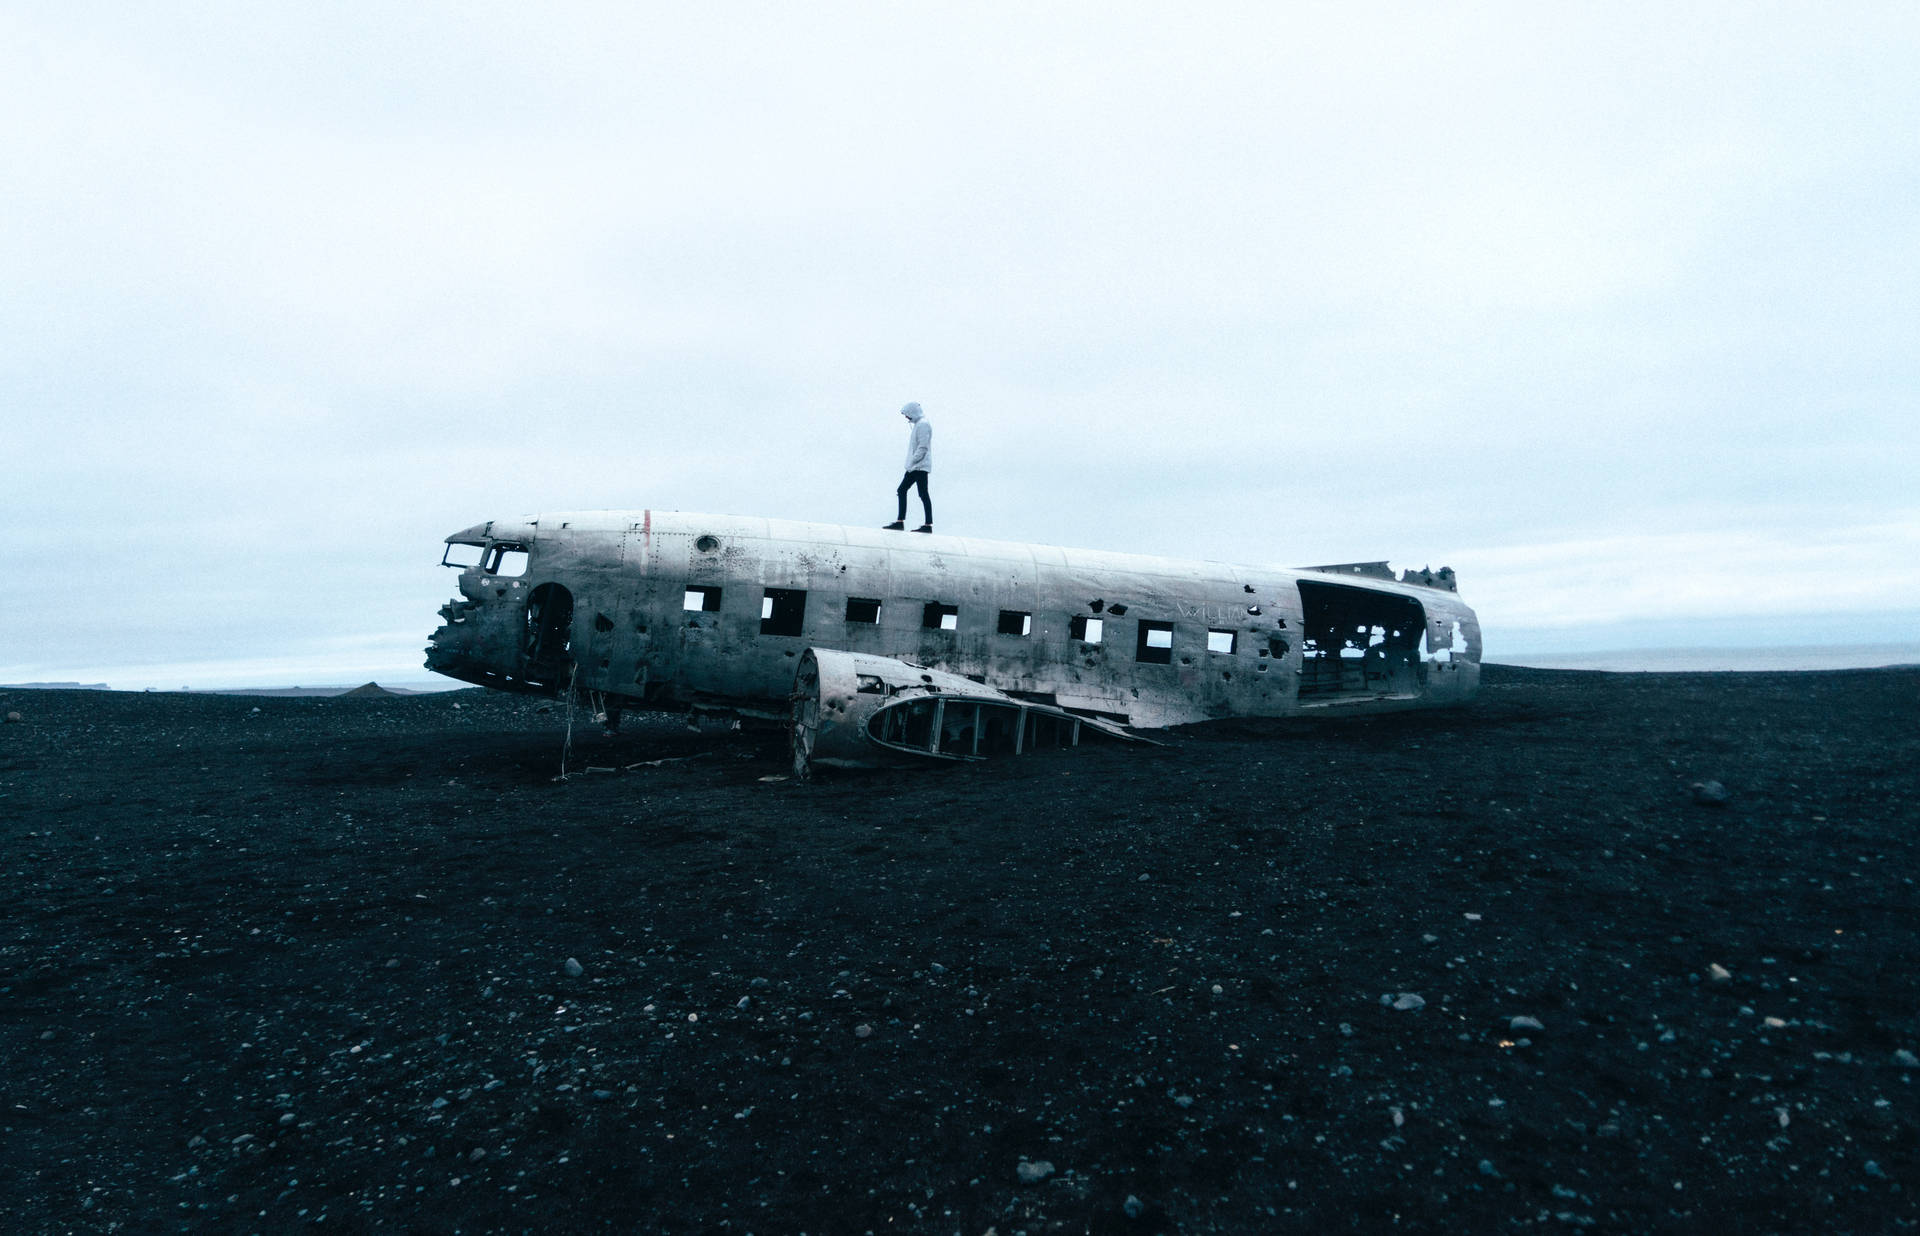 Wrecked Plane 4k Hd